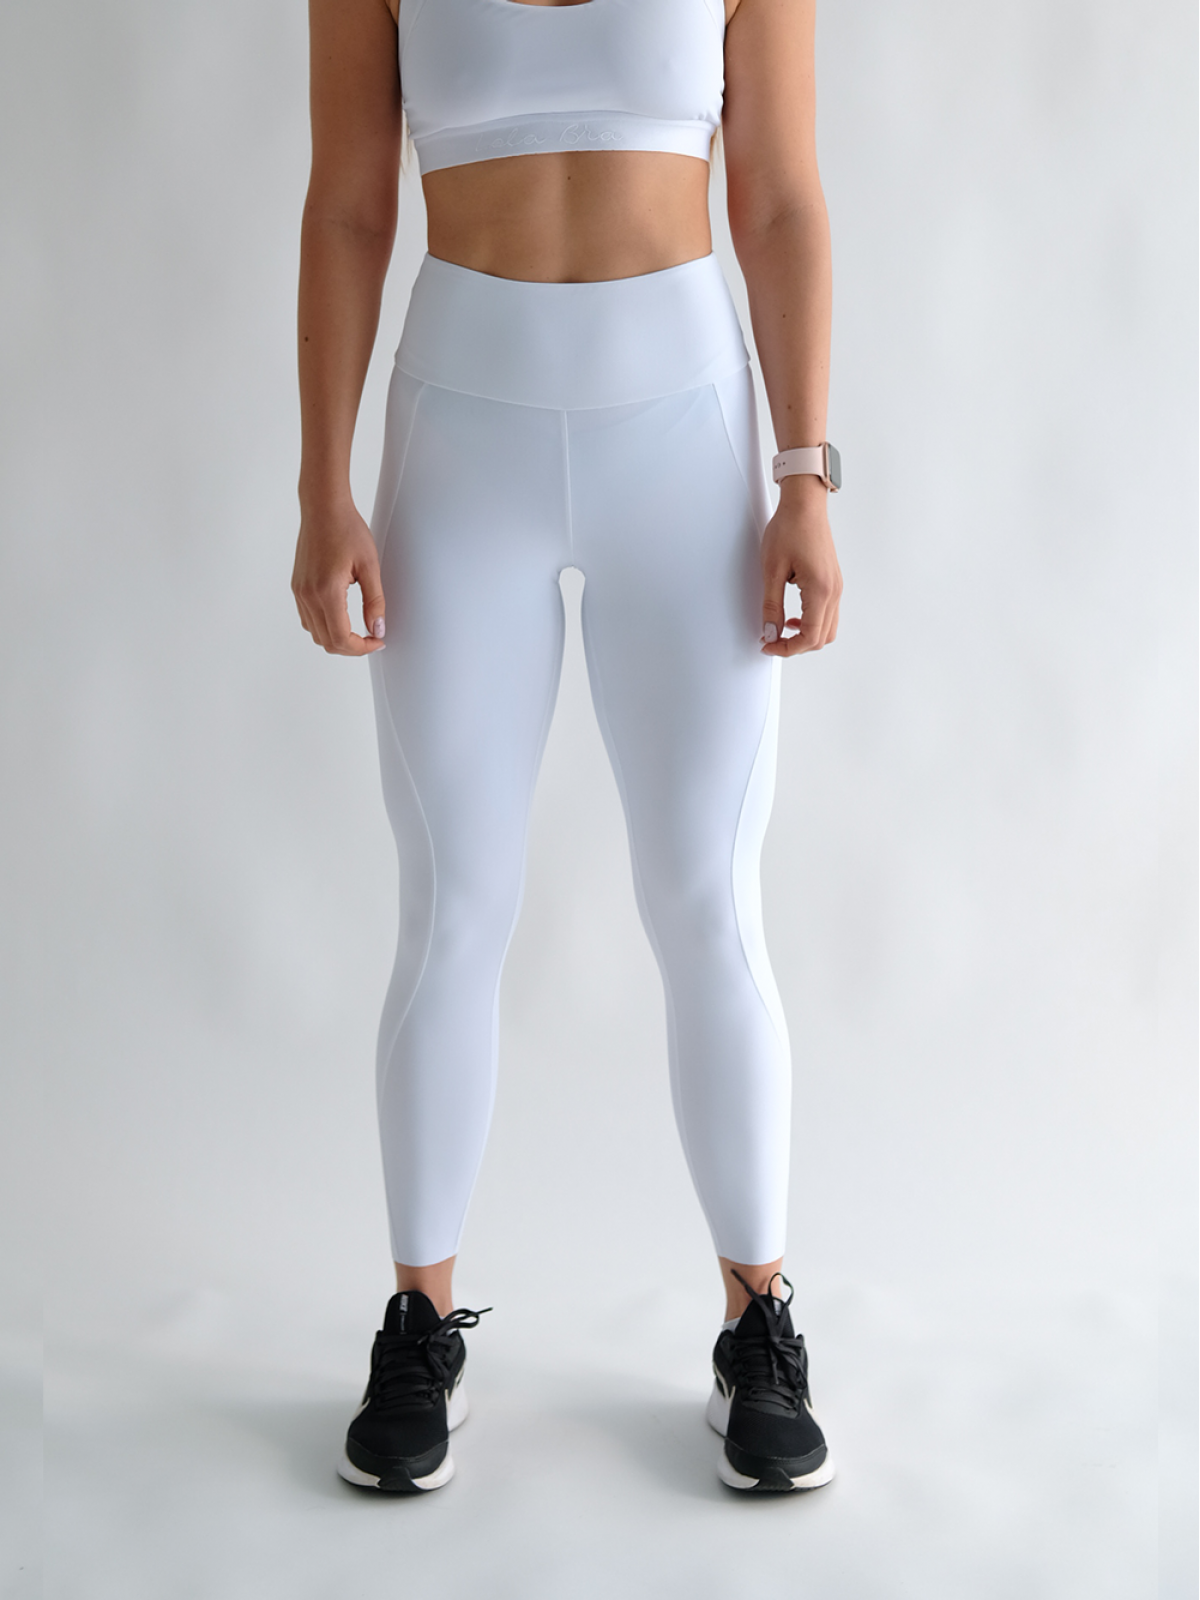 White athletic leggings